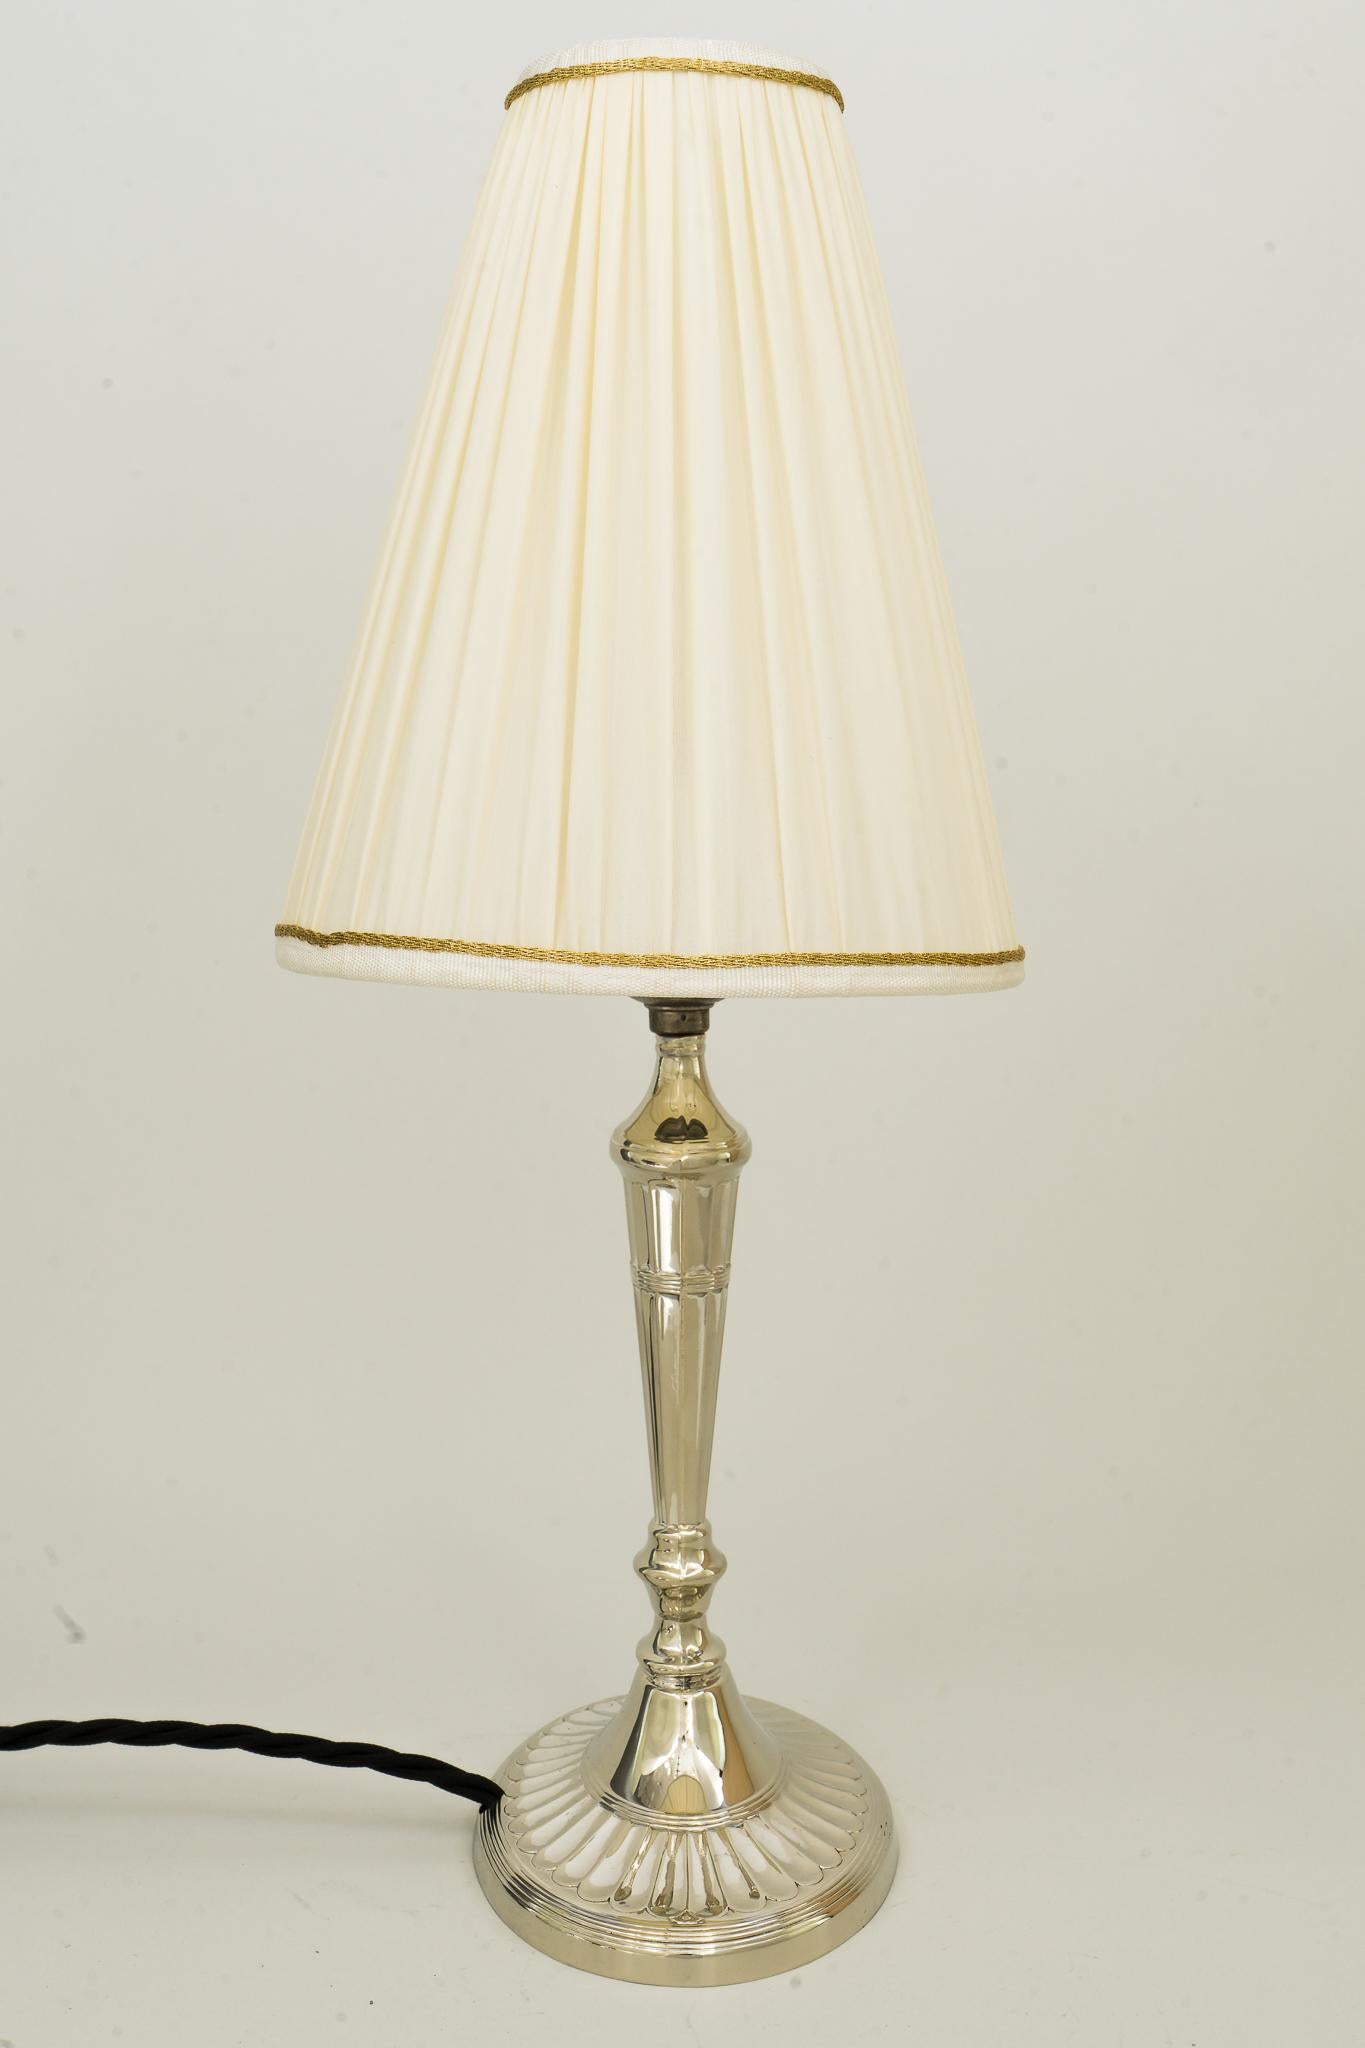 Early 20th Century Art Deco Oval Table Lamp Alpaca with Fabric Shade, circa 1920s